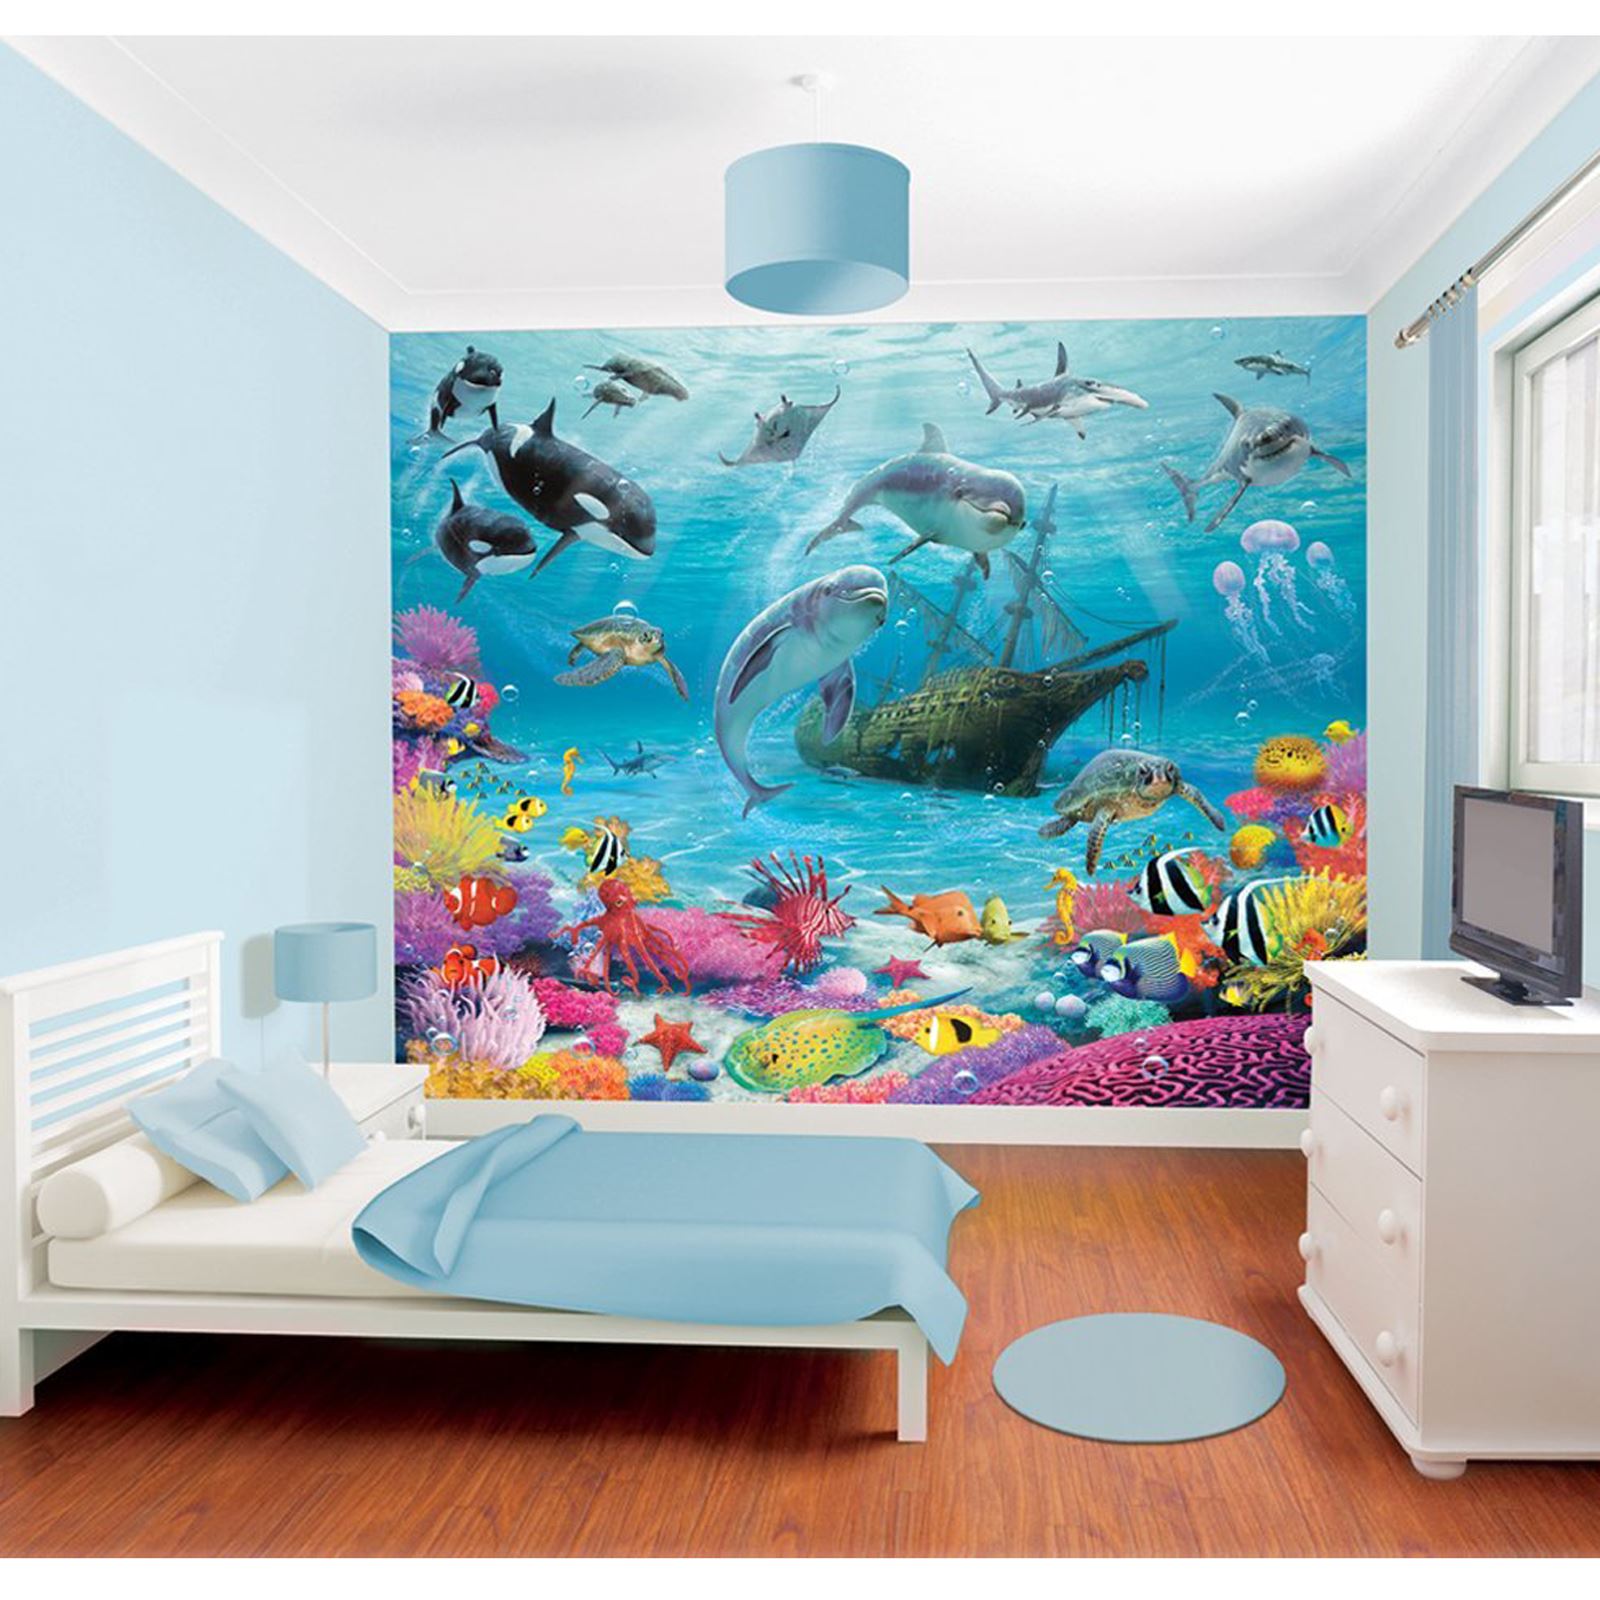 papier peint chambre peppa pig,aqua,turquoise,mur,chambre,mural